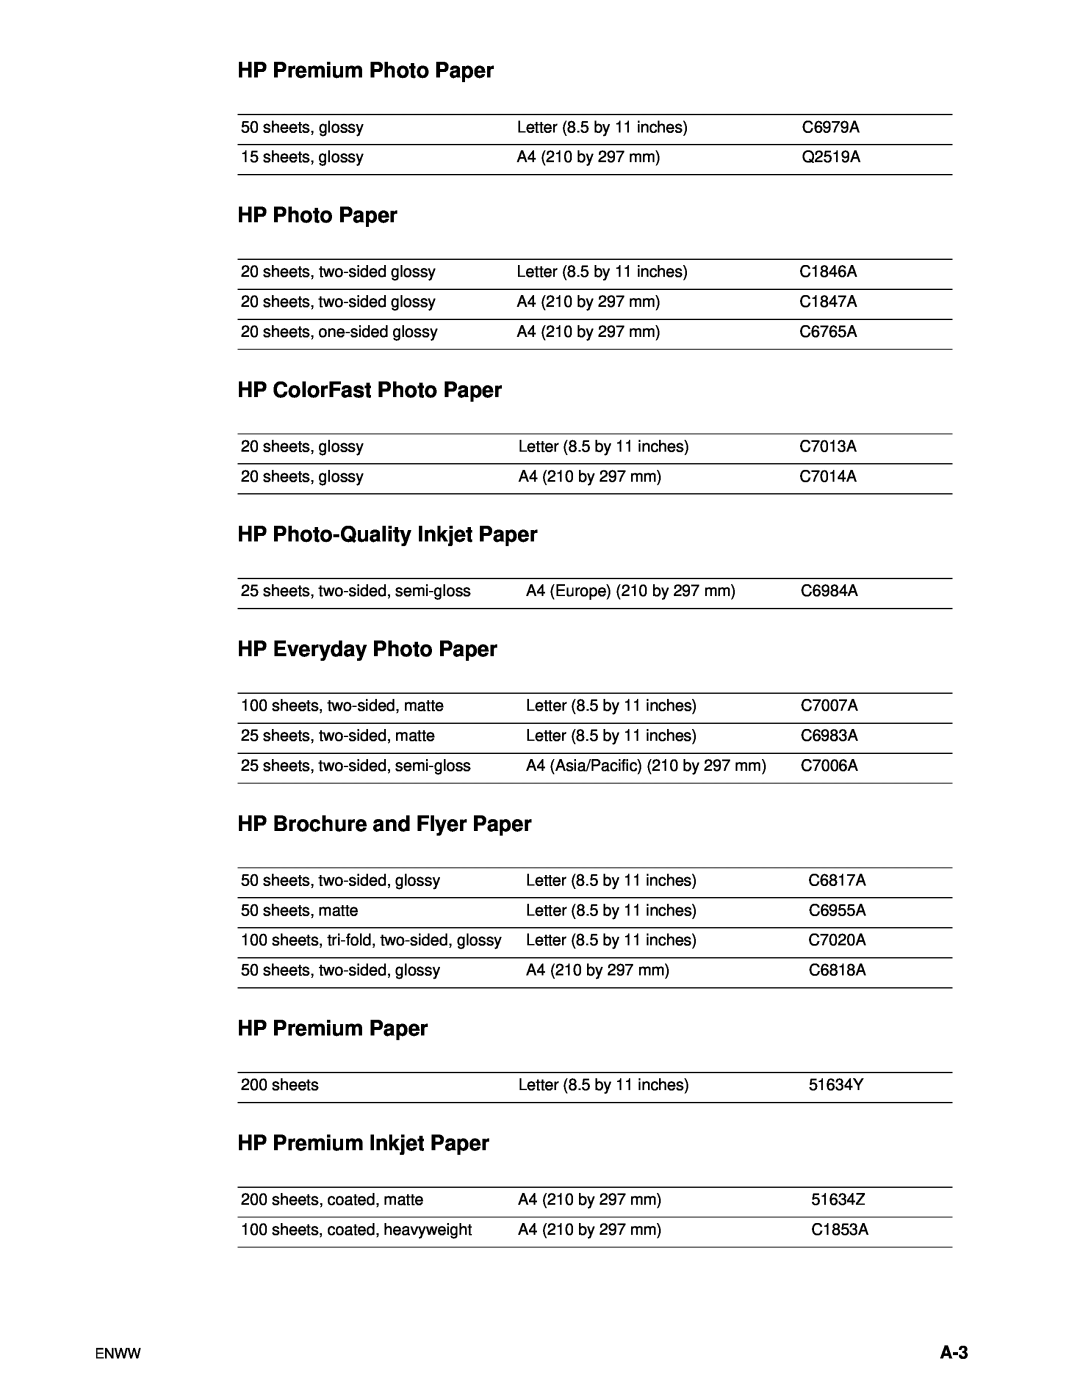 HP 1100dtn manual HP Premium Photo Paper, HP Photo Paper, HP ColorFast Photo Paper, HP Photo-Quality Inkjet Paper 